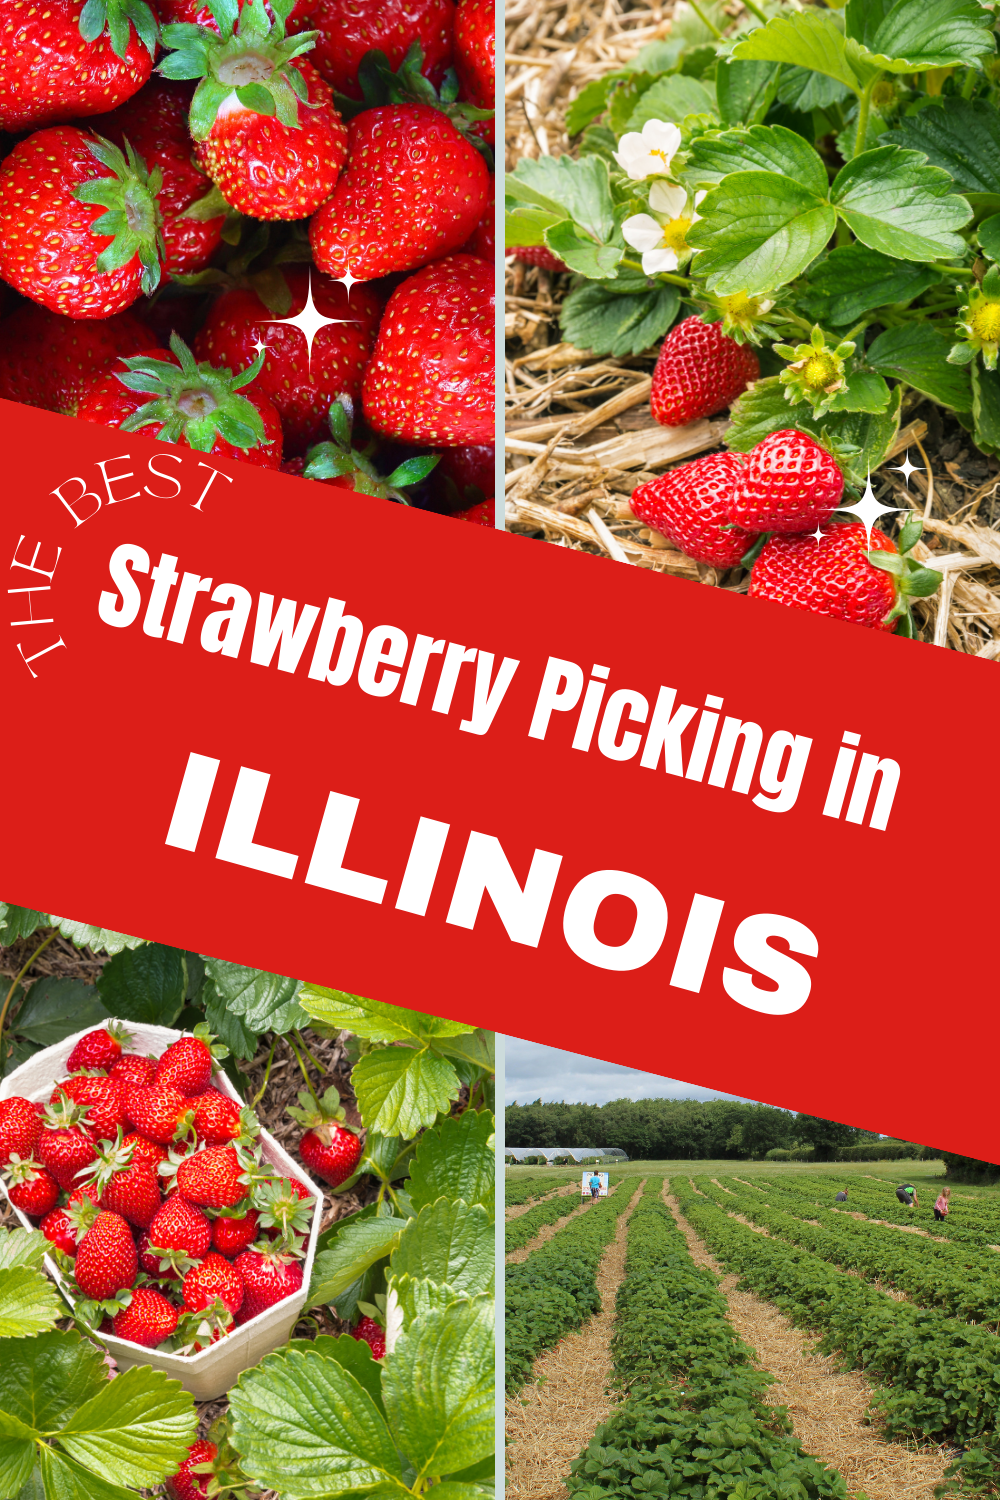 Illinois Strawberry u-pick